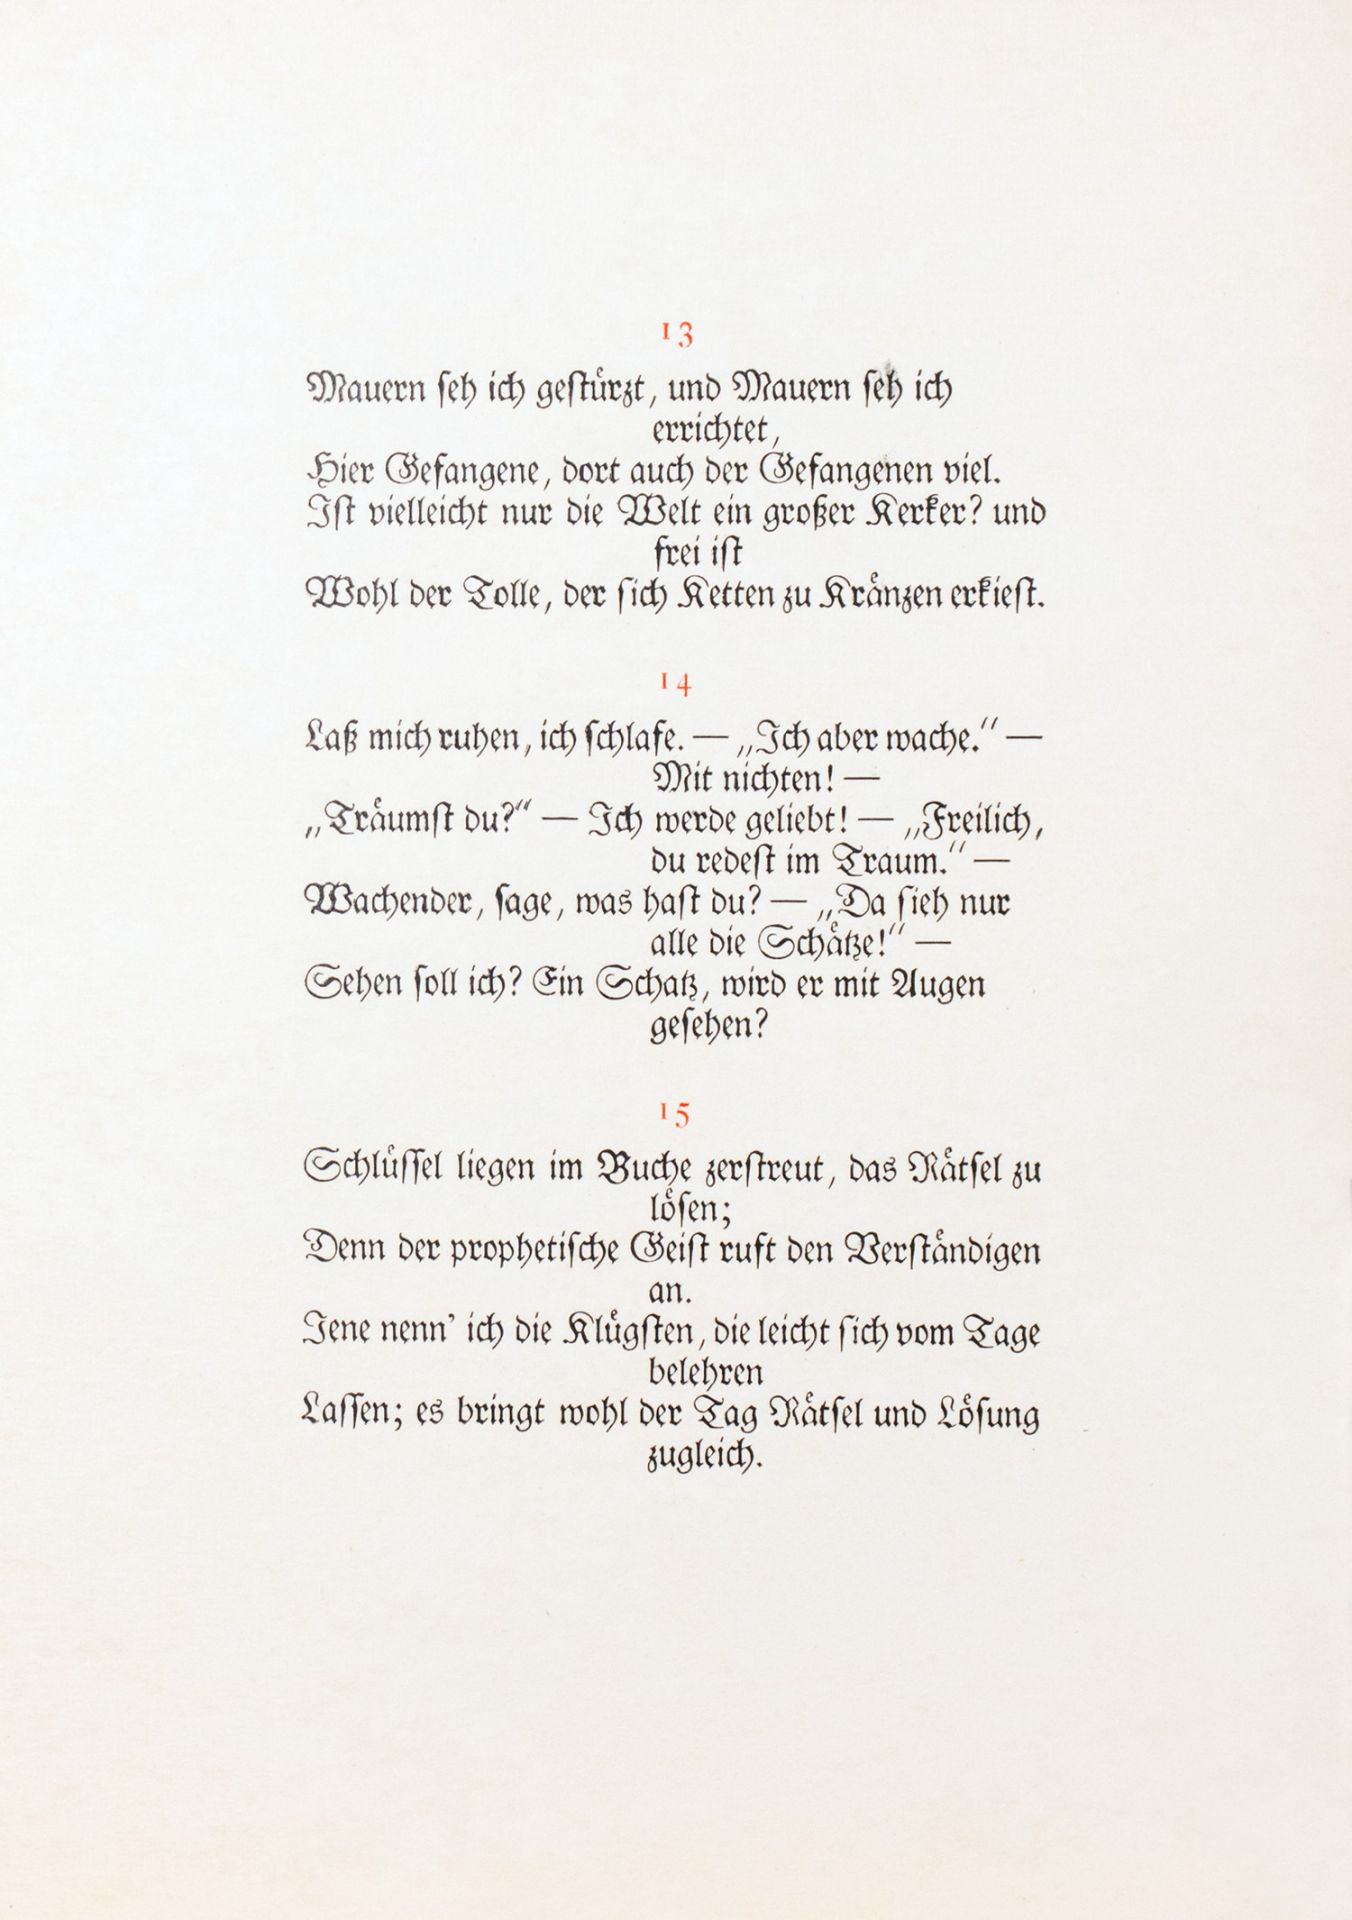 Alfred Hoennicke - [Johann Wolfgang von] Goethe. Weissagungen des Bakis. - Image 2 of 2